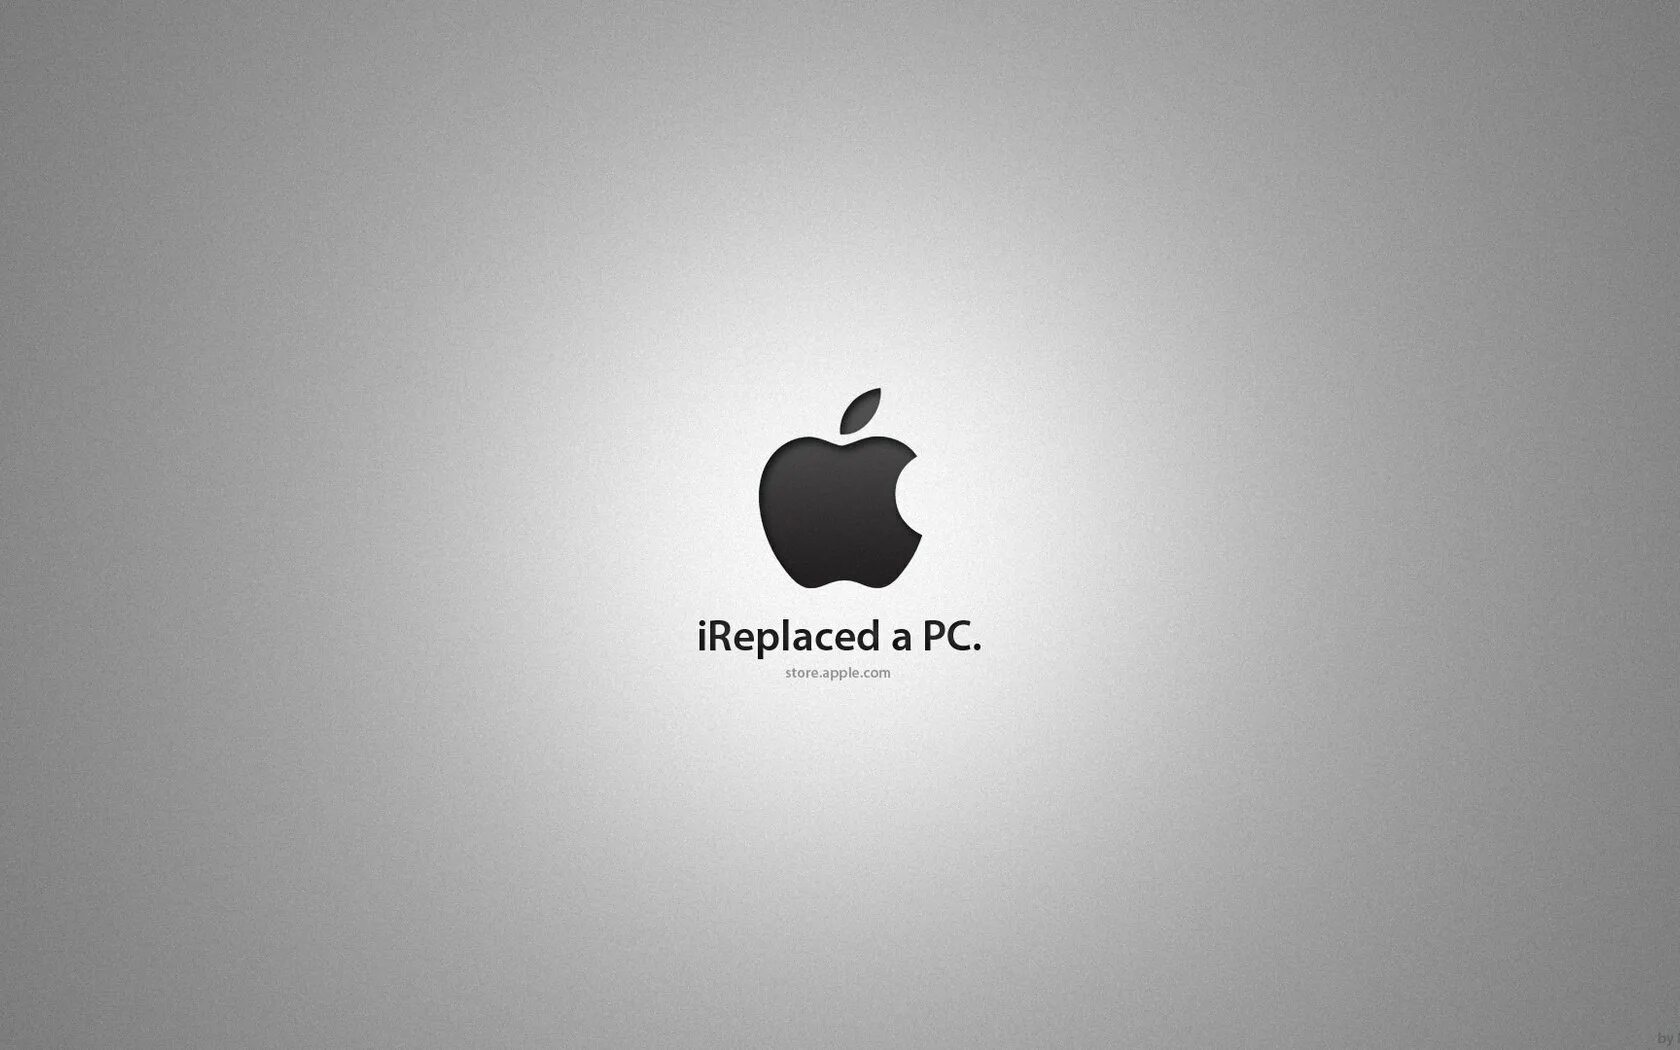 Обои эппл. Обои Apple. Рабочий стол Apple. Рабочий стол в стиле Apple. Фото логотипа Apple.